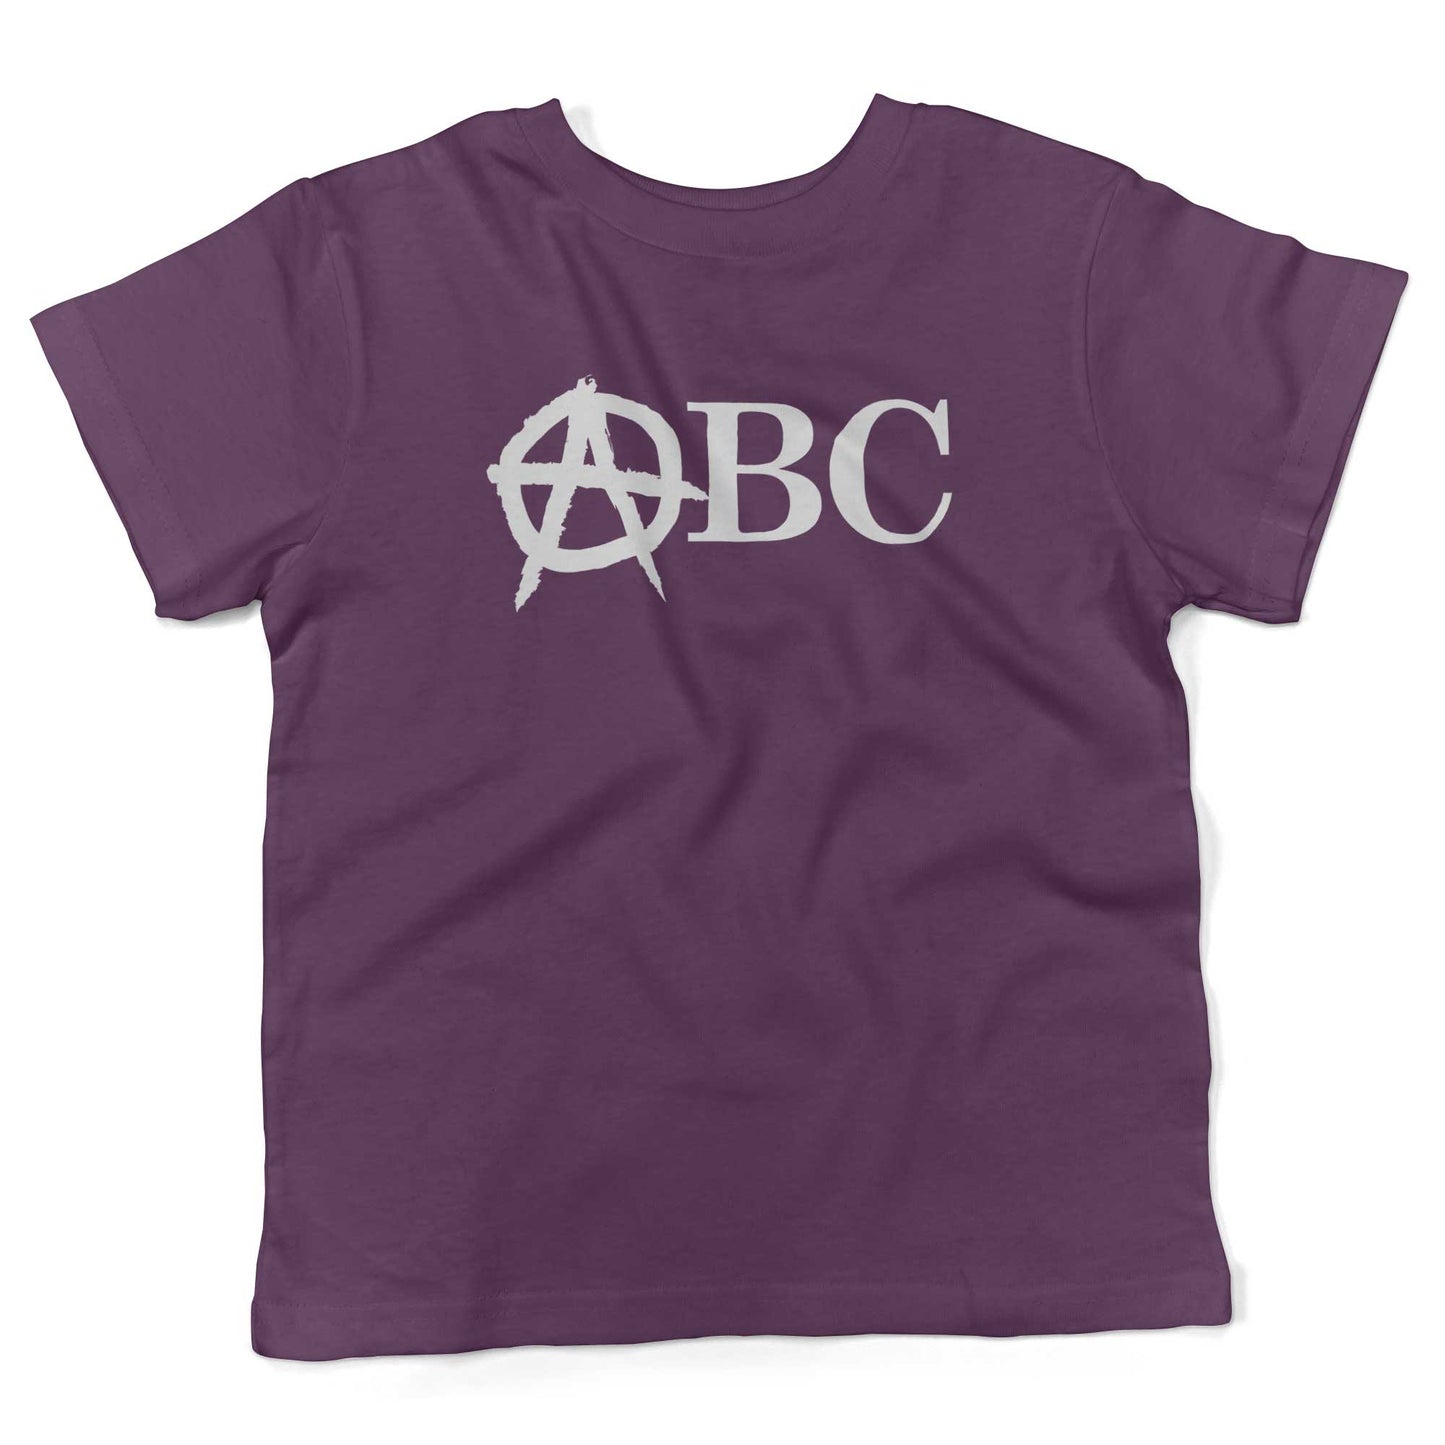 Punk Rock Alphabet Toddler Shirt-Organic Purple-2T